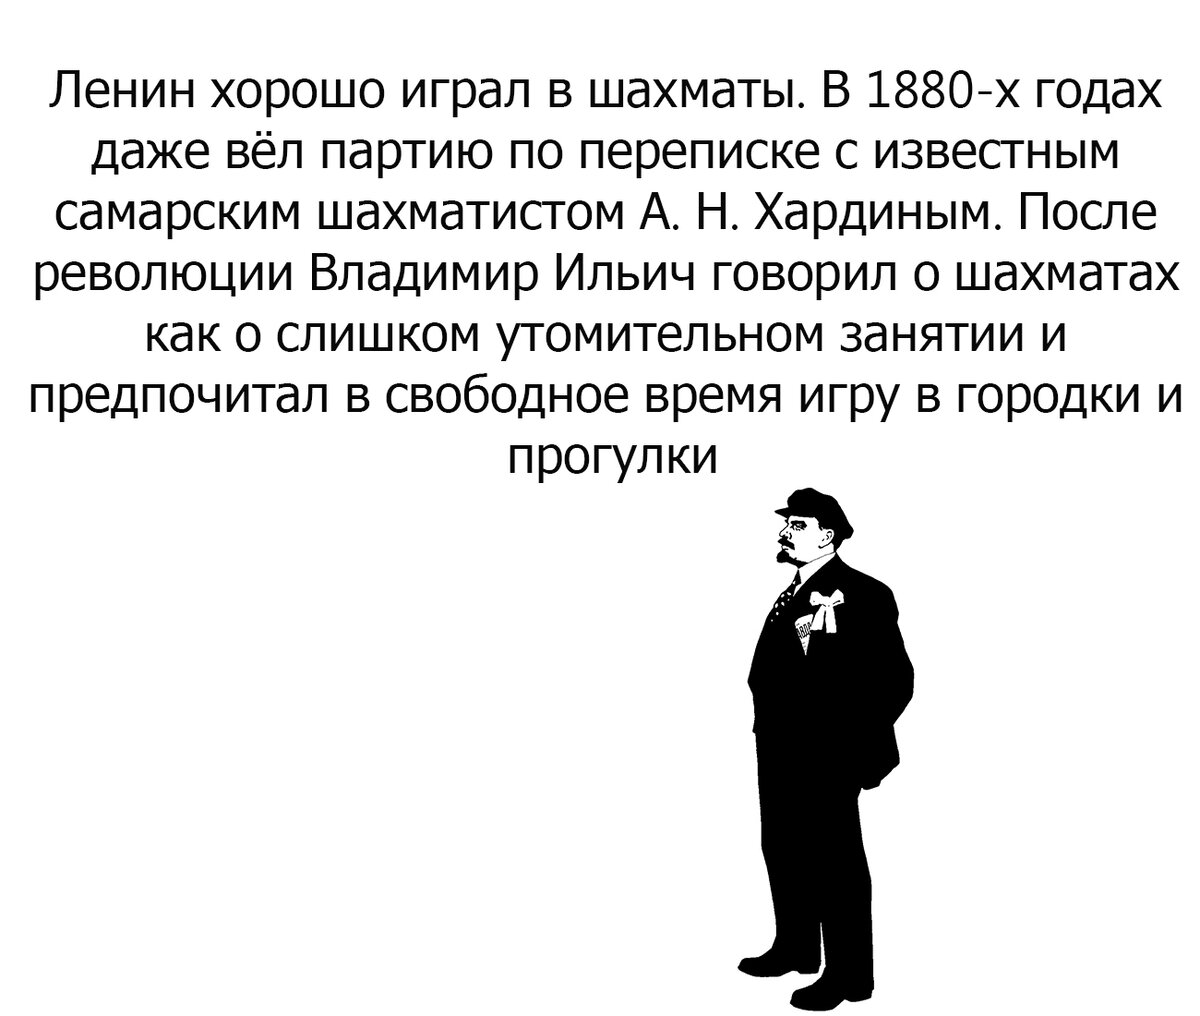 Факты о Ленине